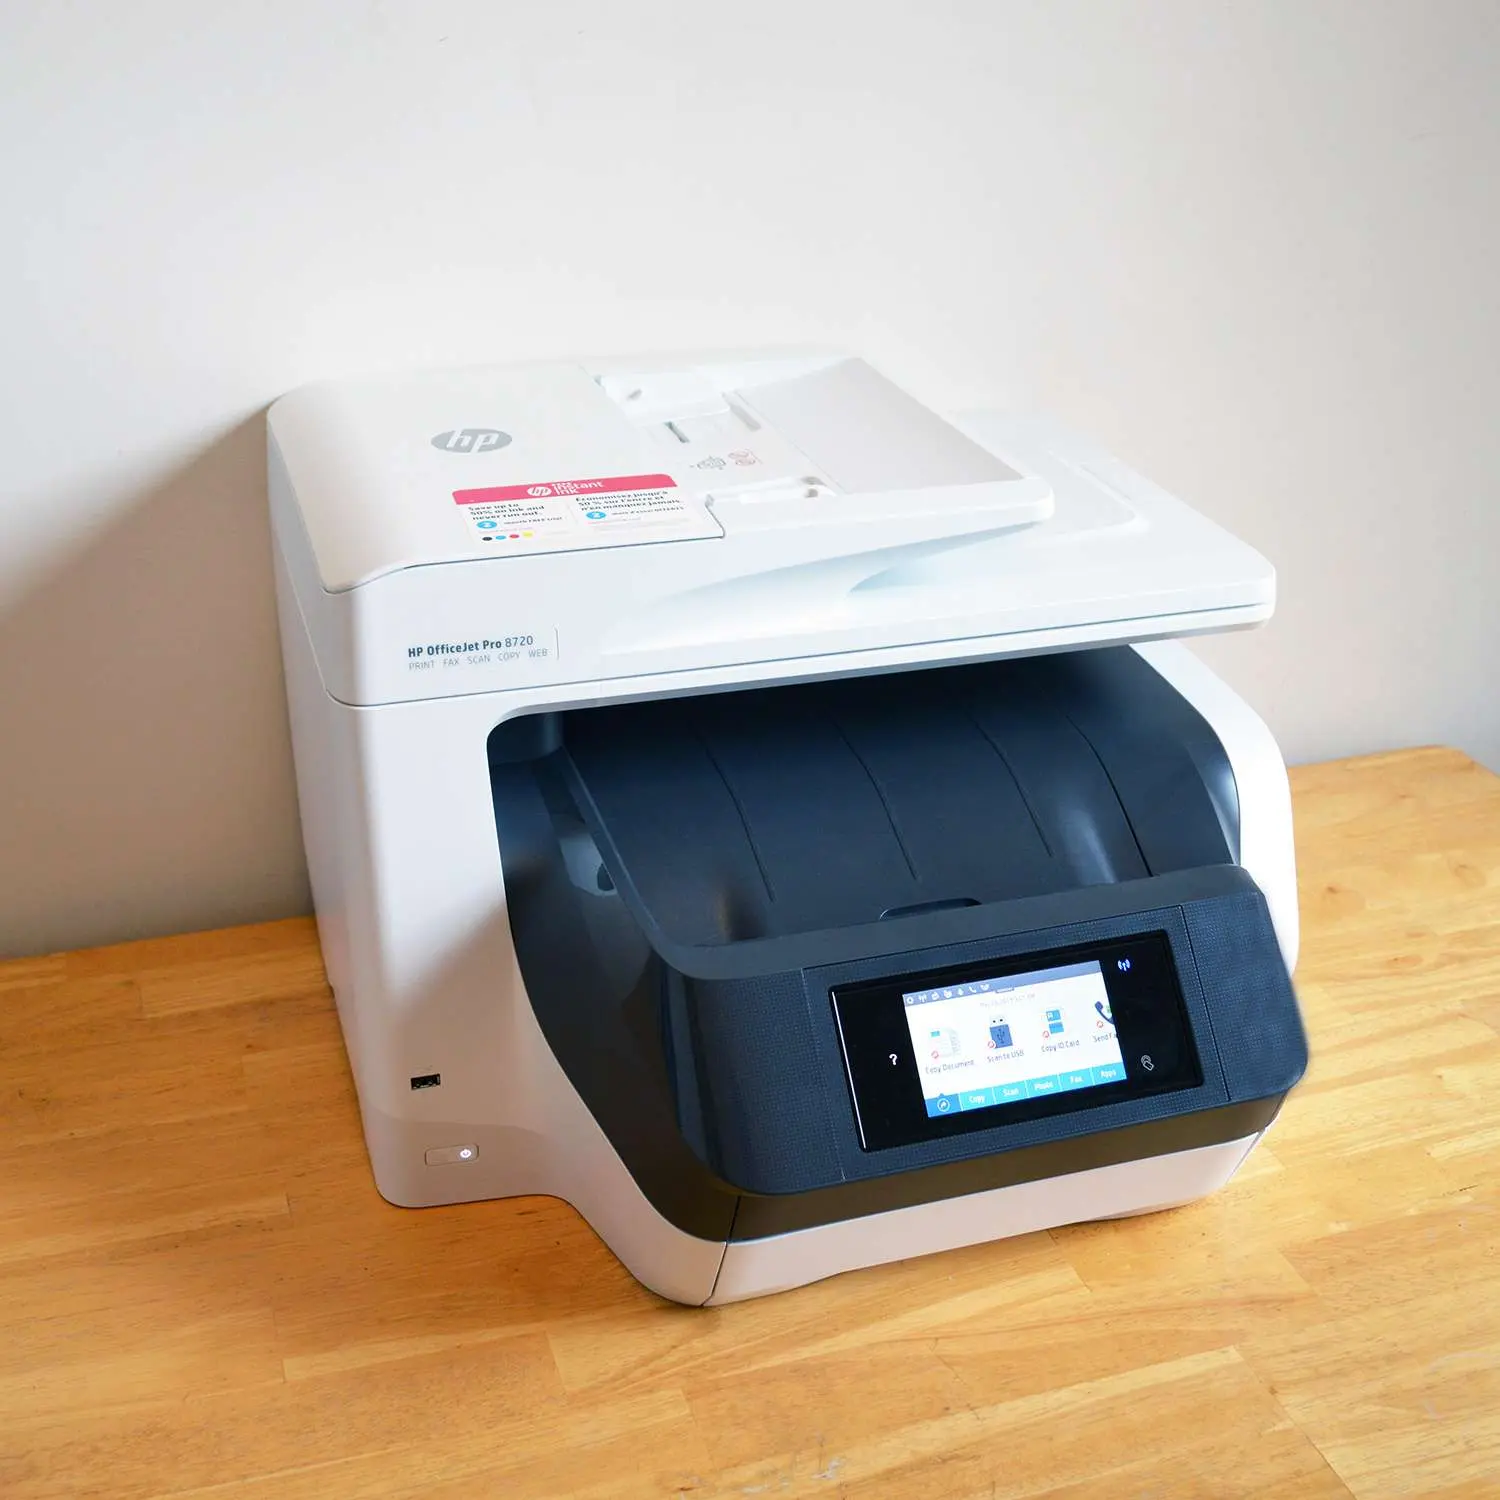 Hp 8720 printer - reliable performance and photo printing